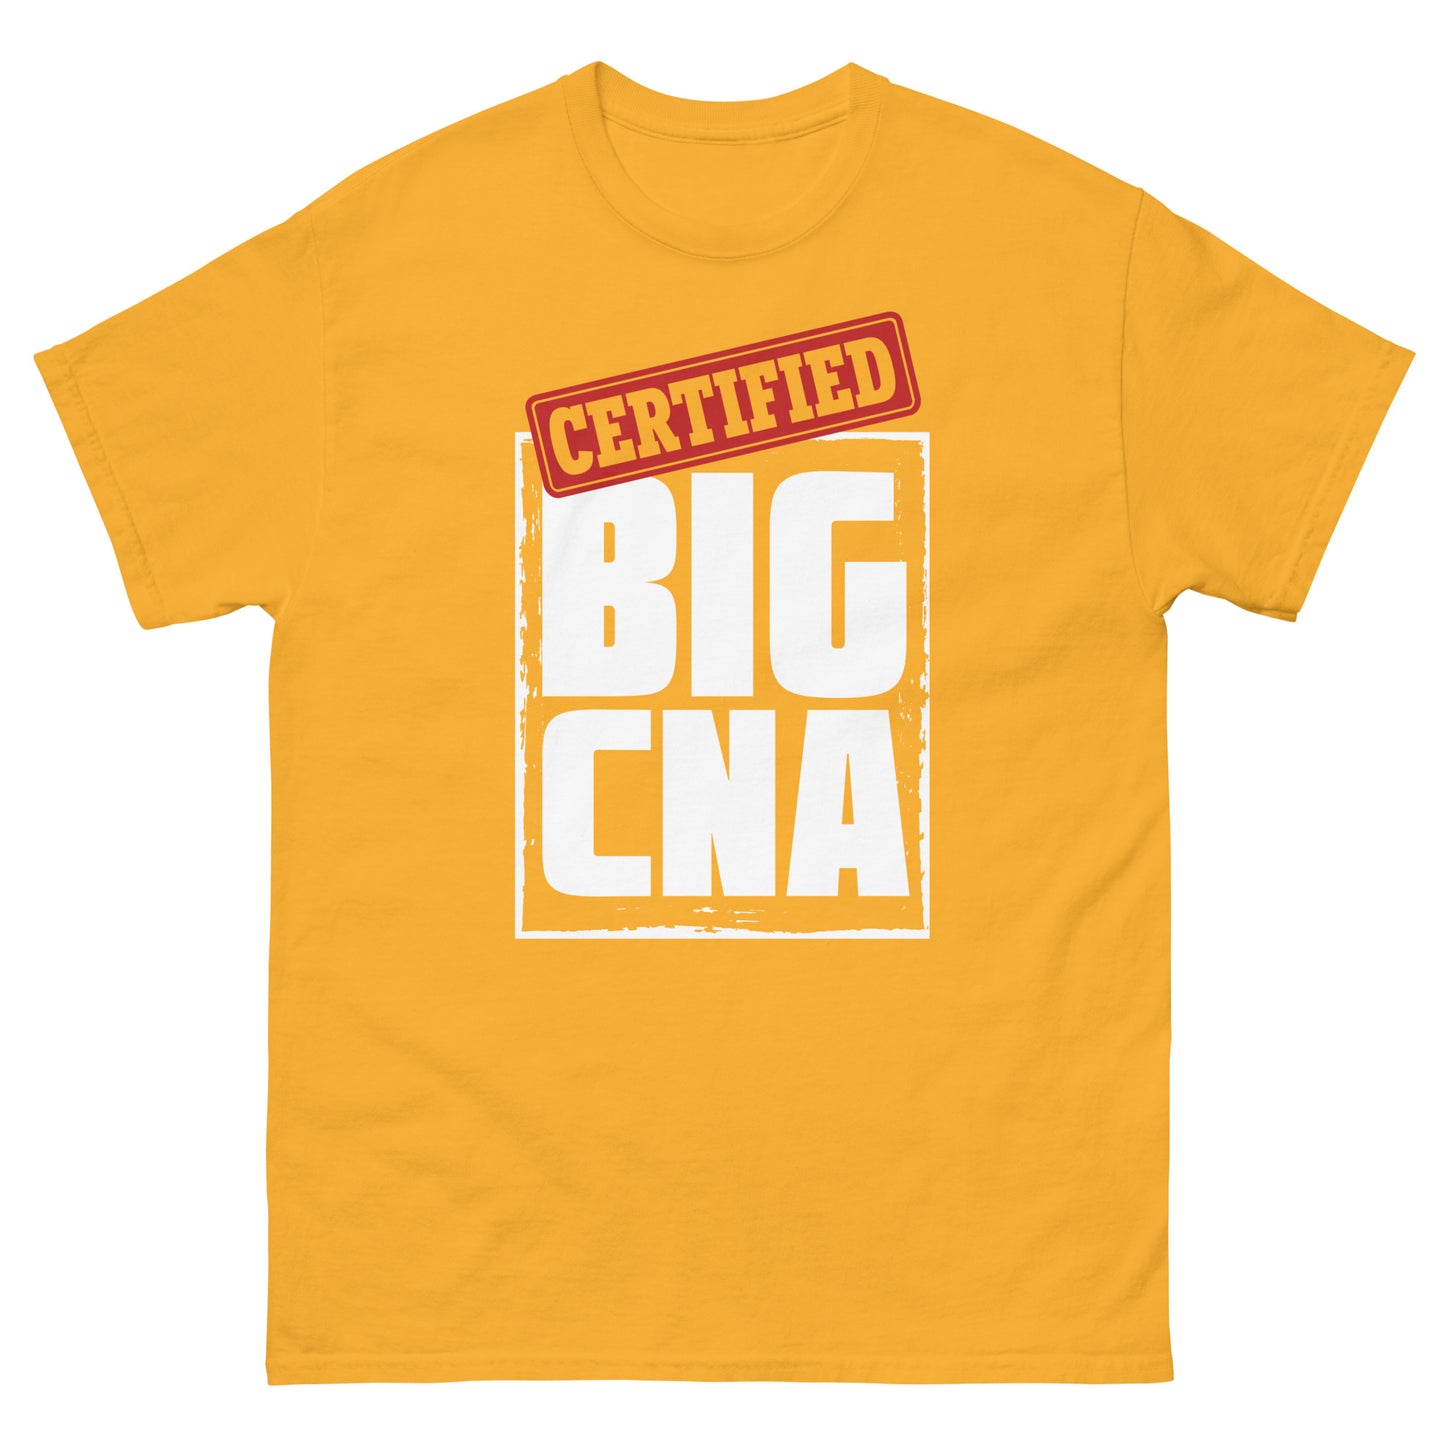 "Certified BIG CNA" T-Shirt